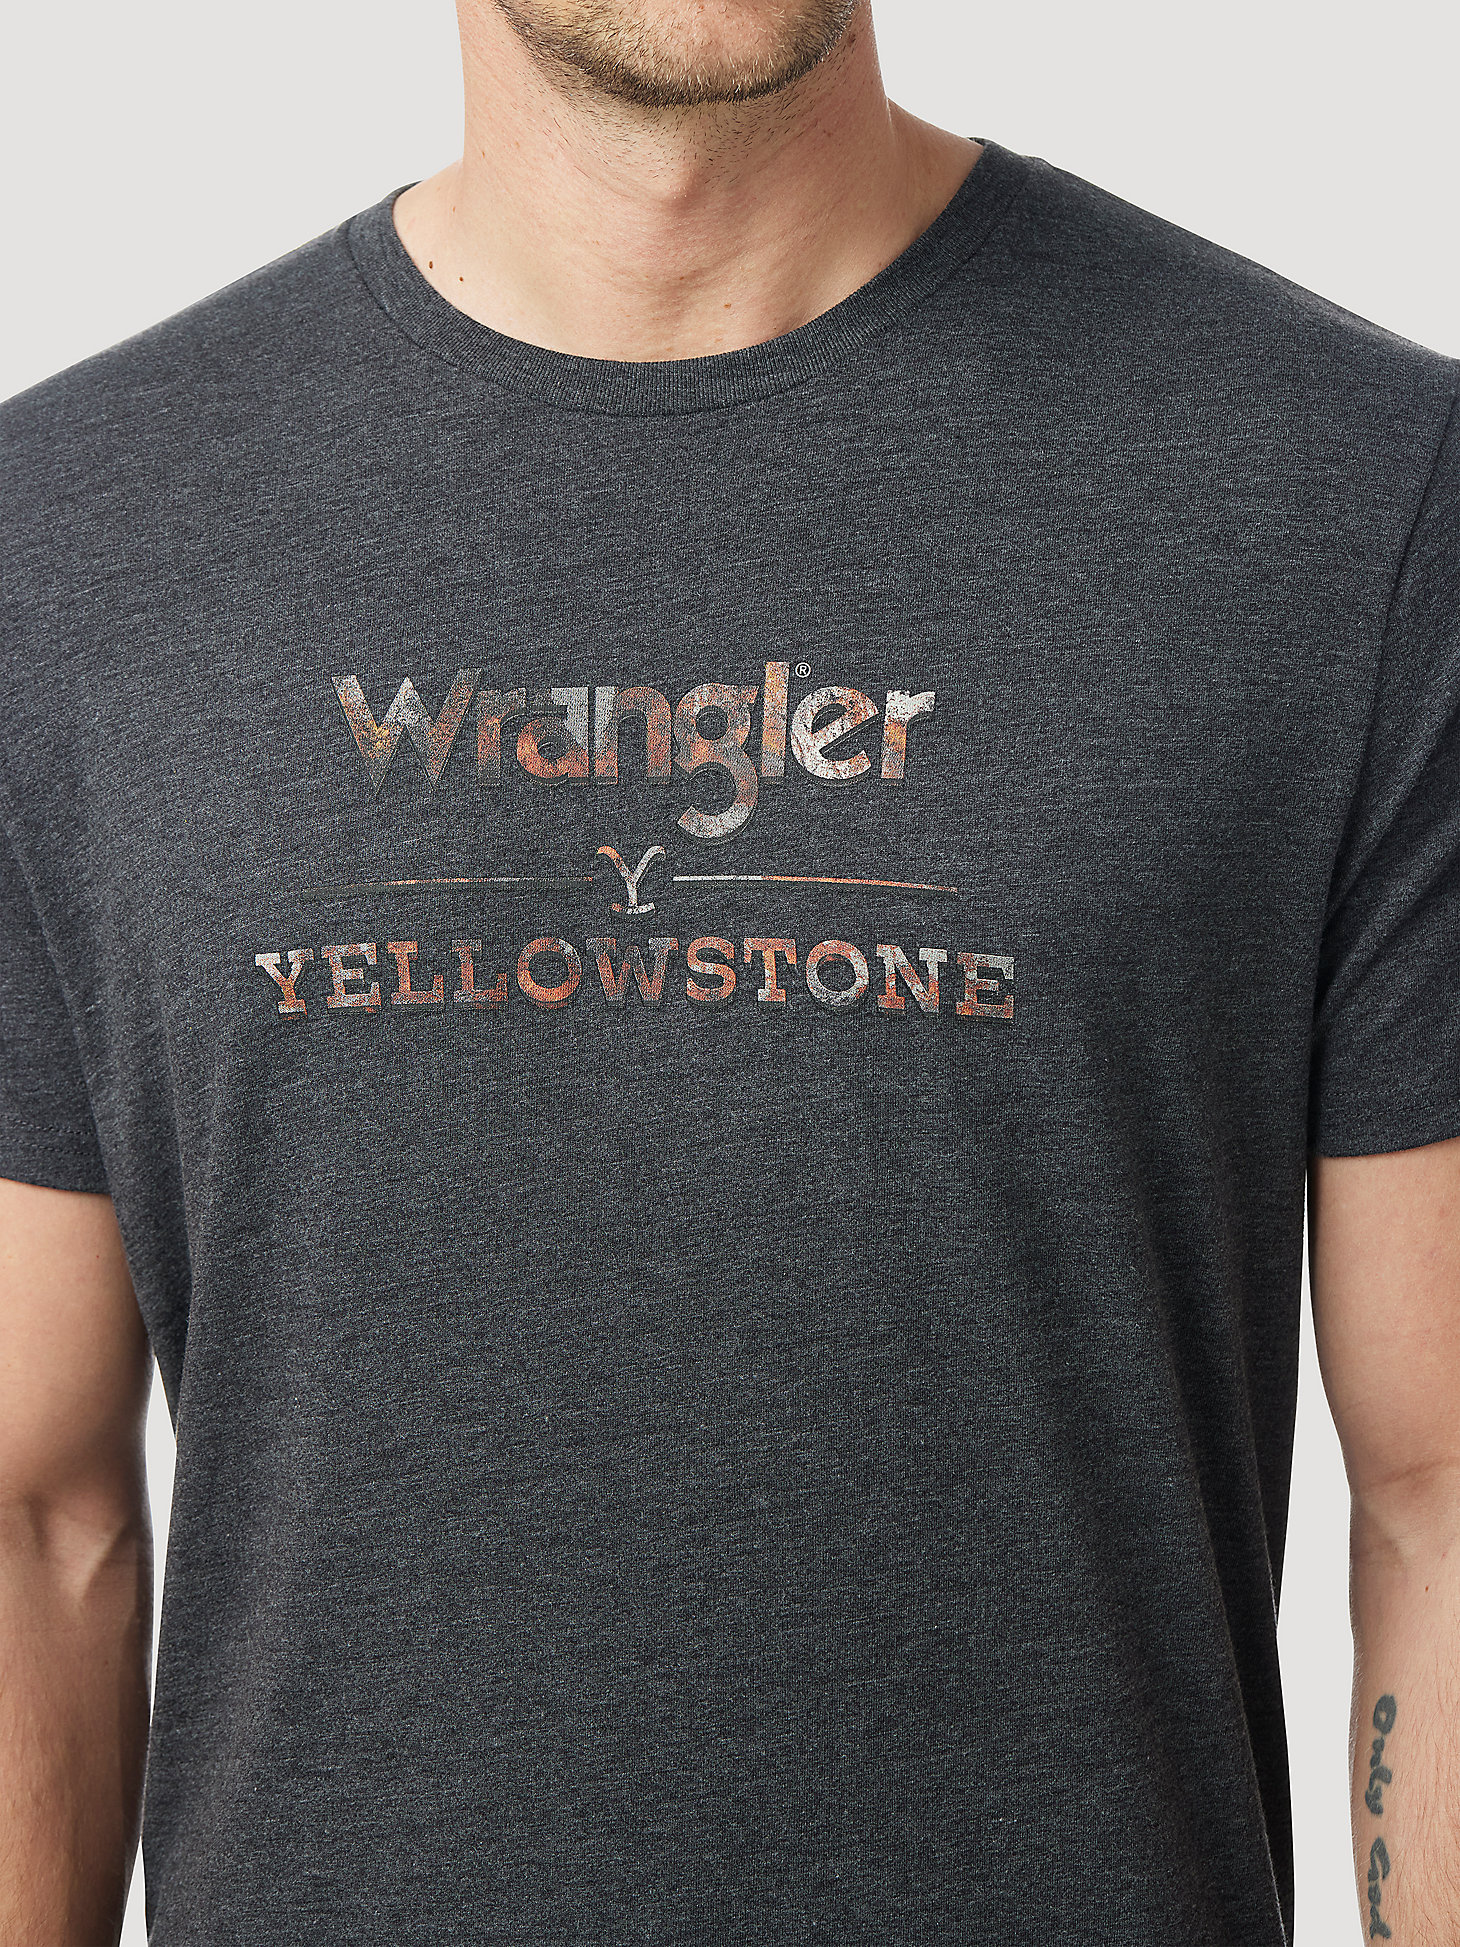 Wrangler x Yellowstone Men's Logo T-Shirt in Caviar Heather alternative view 2